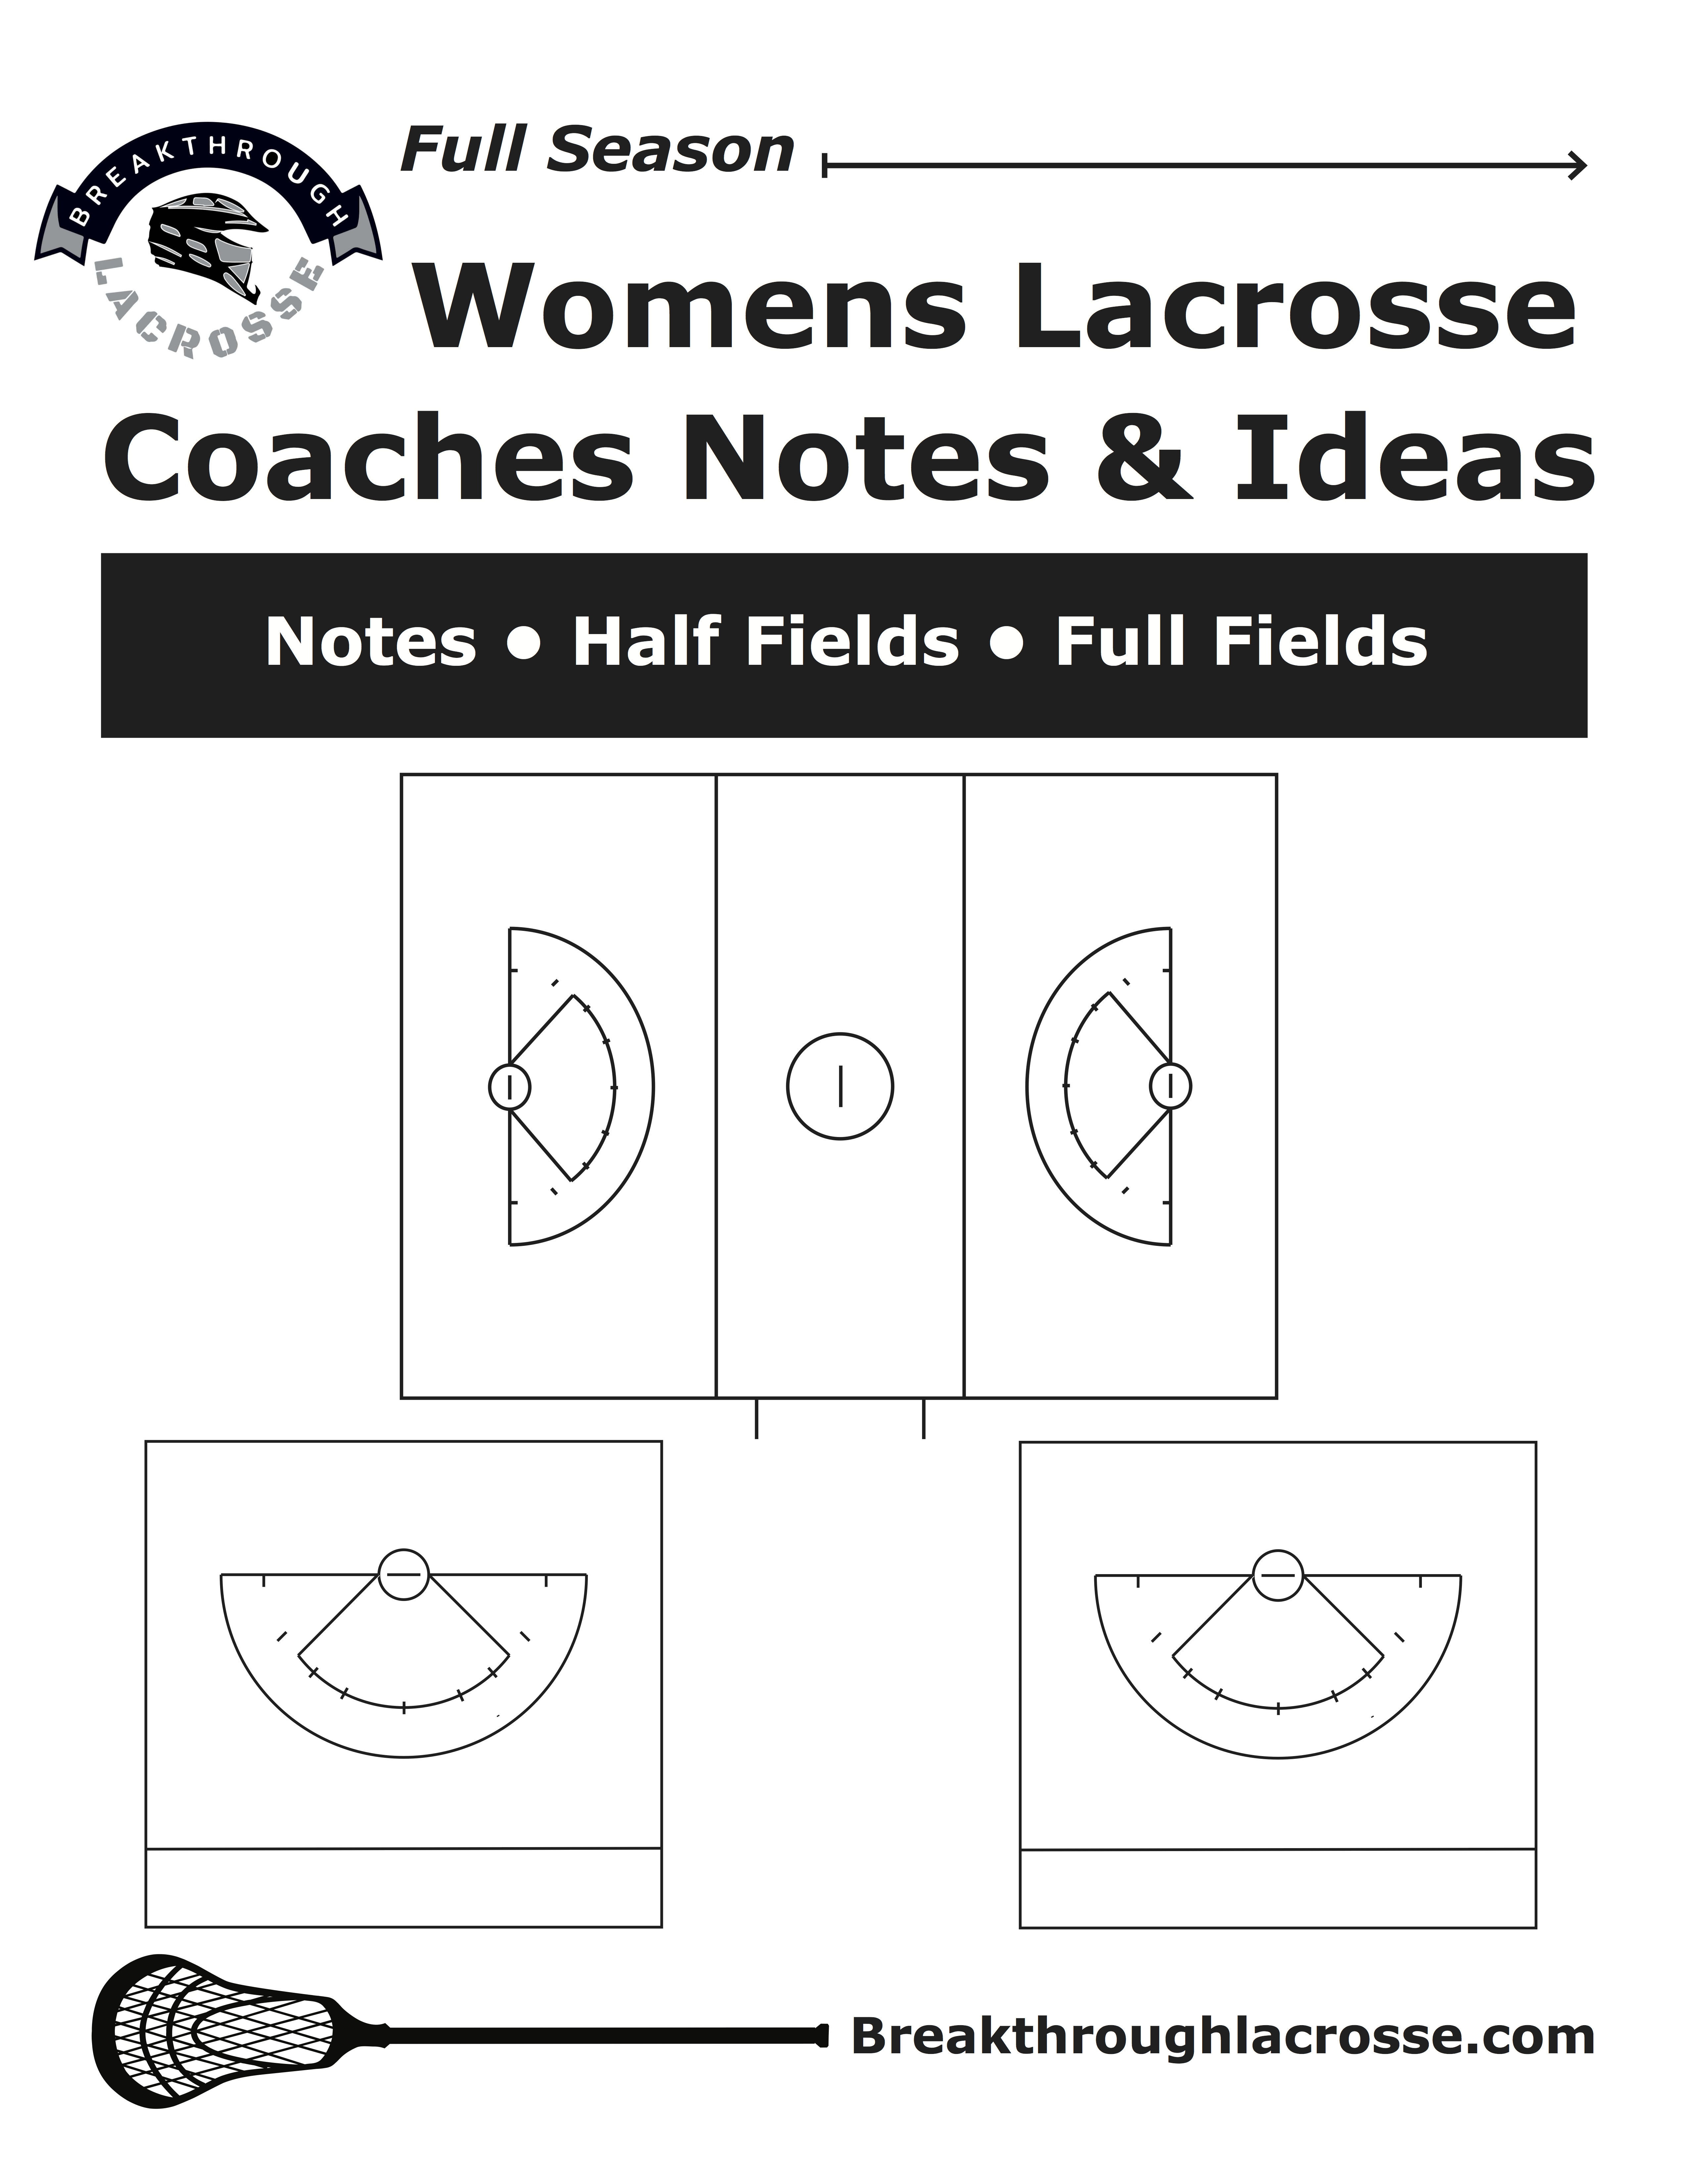 Womens Lacrosse Notes & Ideas Manual